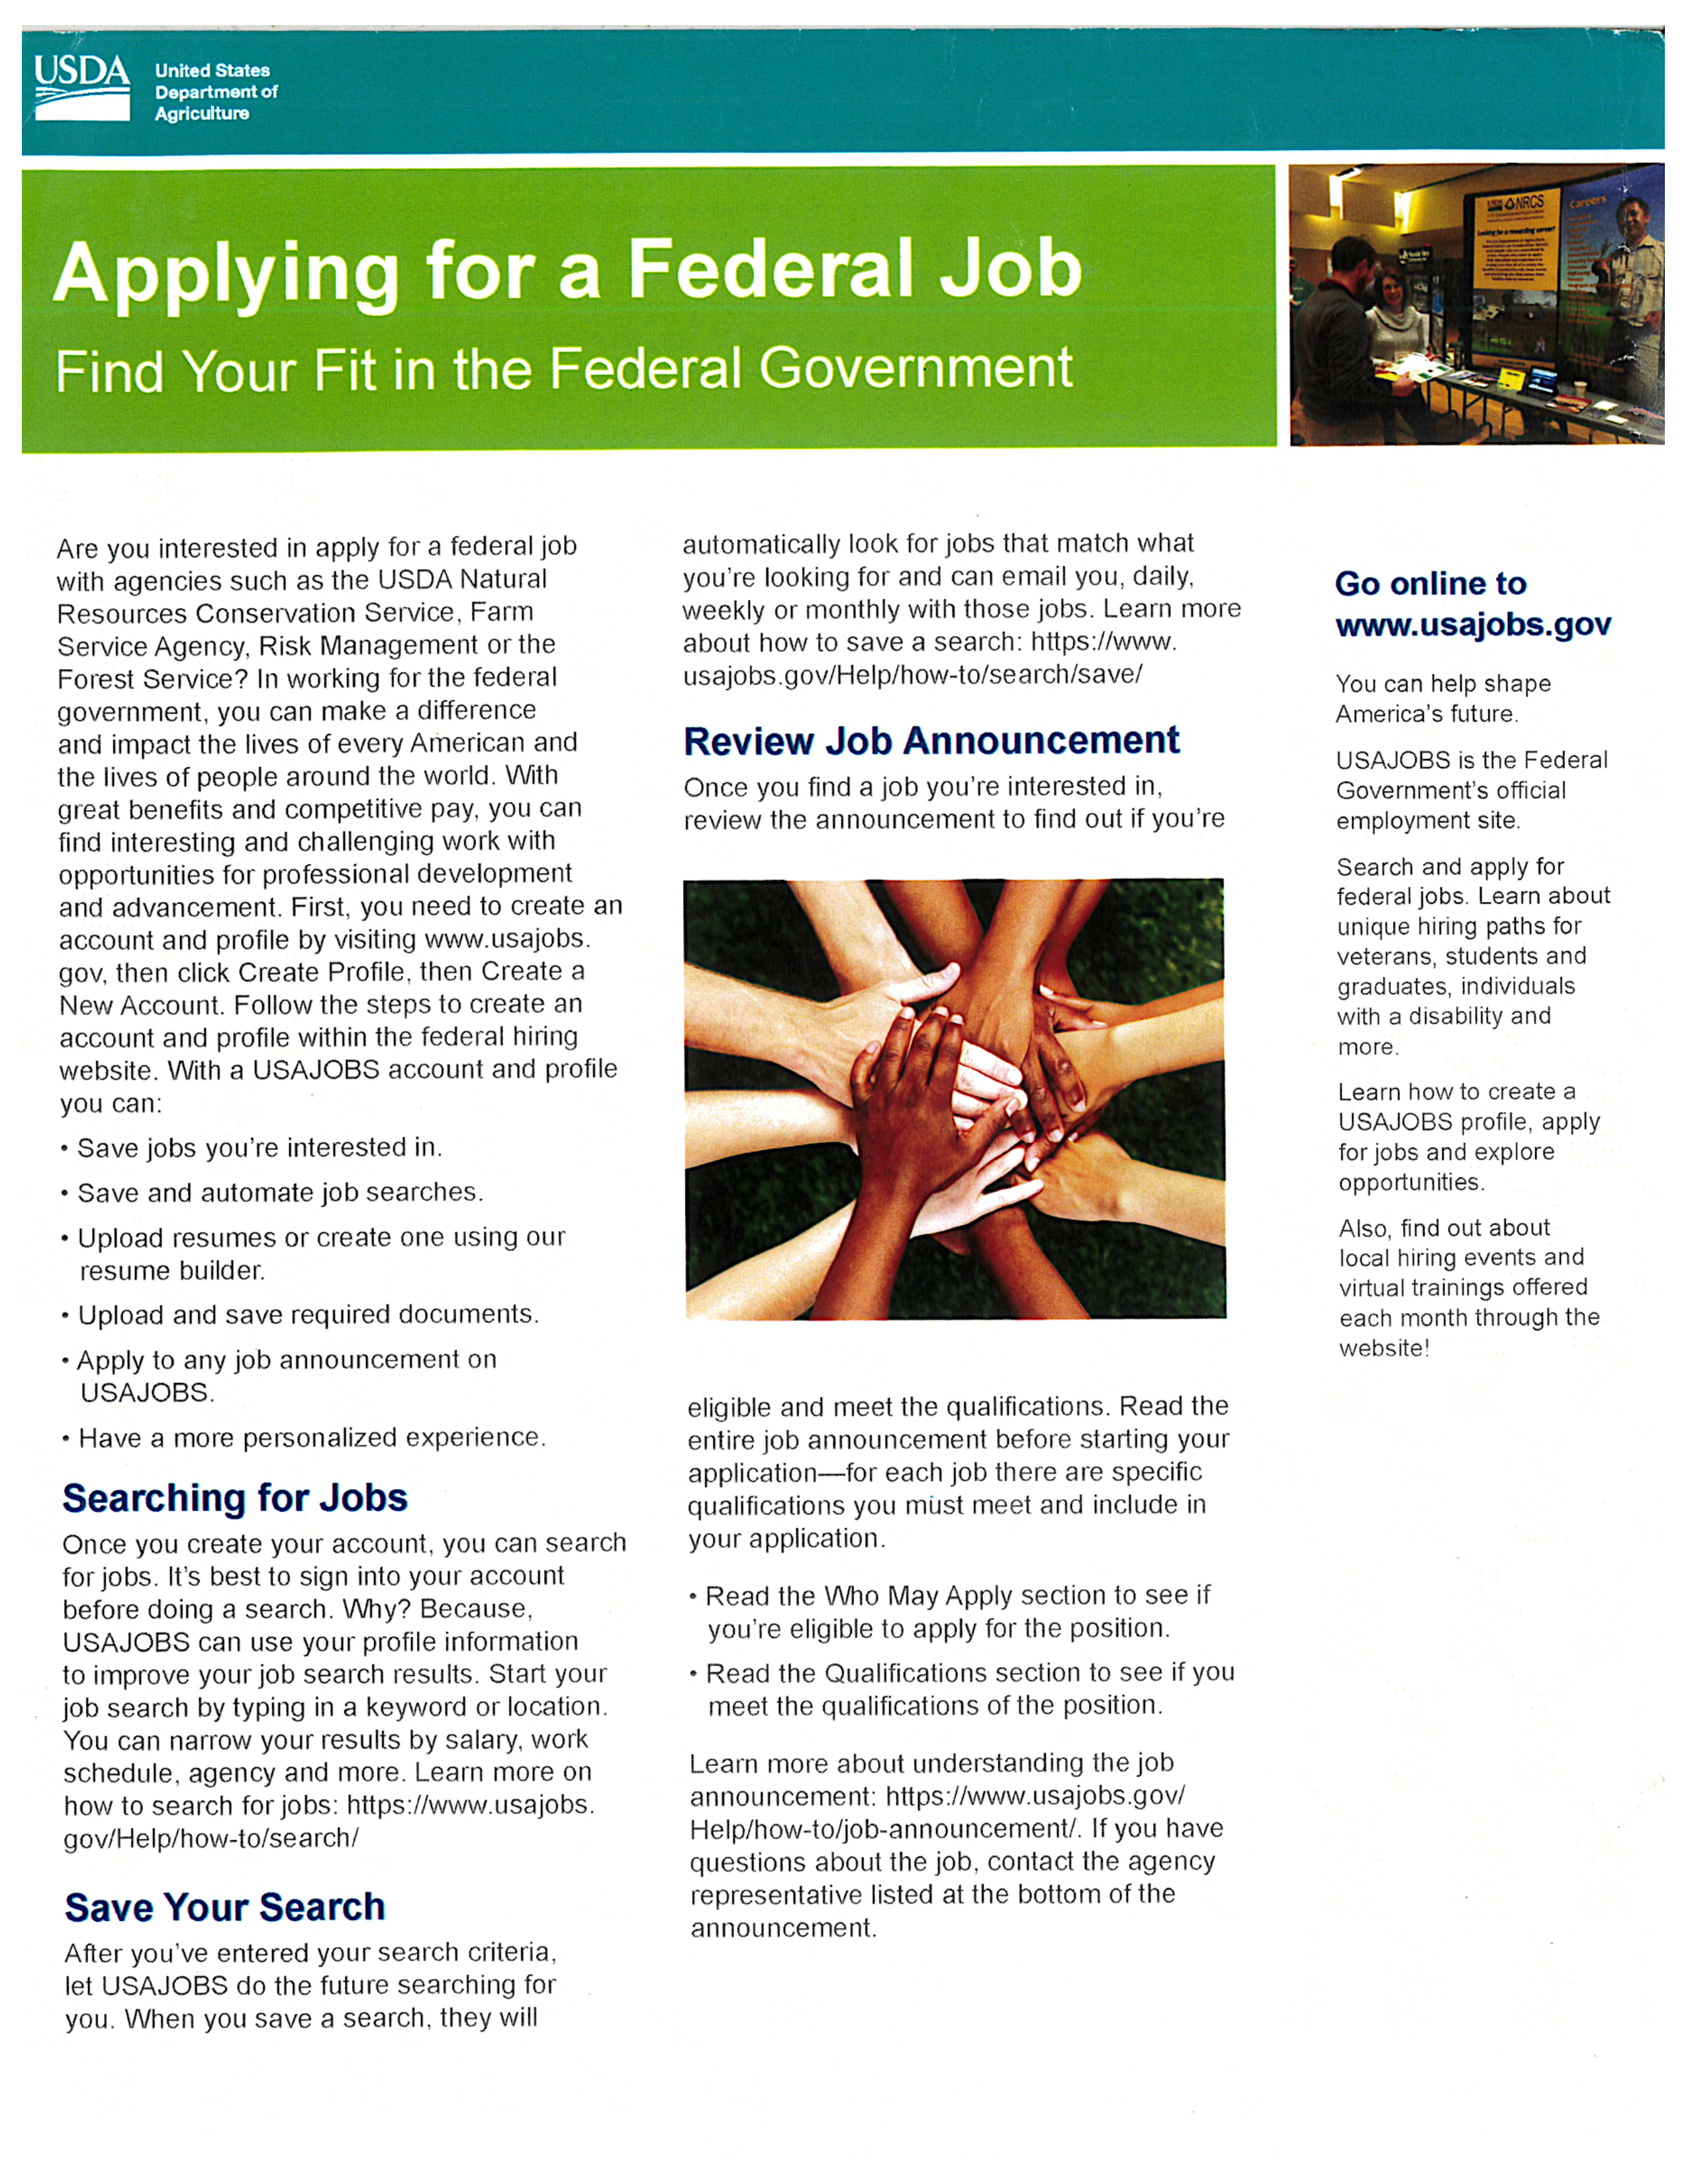 usda_applying_for_a_federal_job_flyer.png